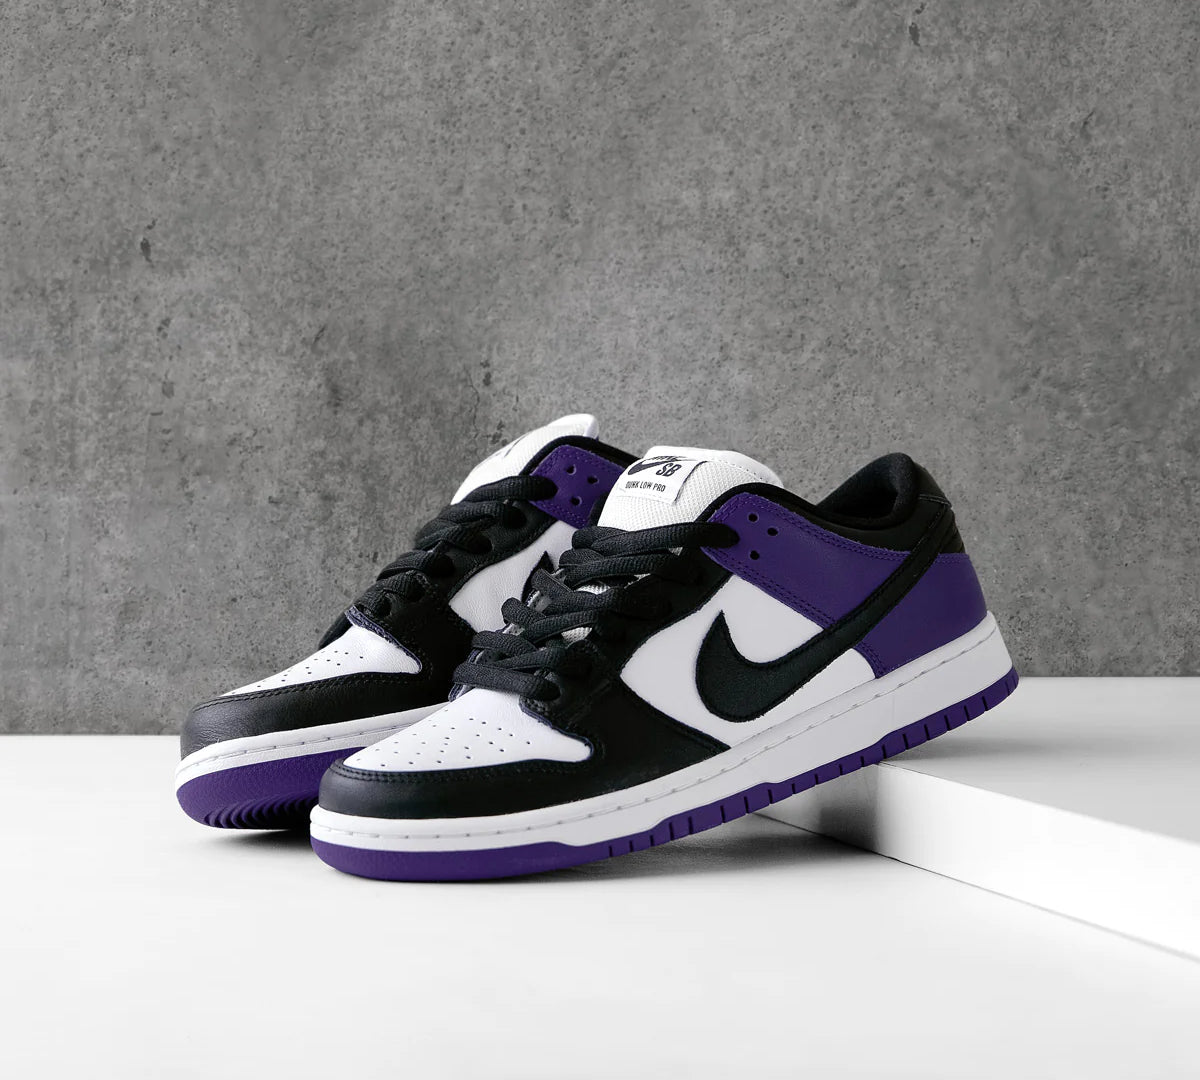 Nike SB Dunk Low Court Purple the purple king is back!